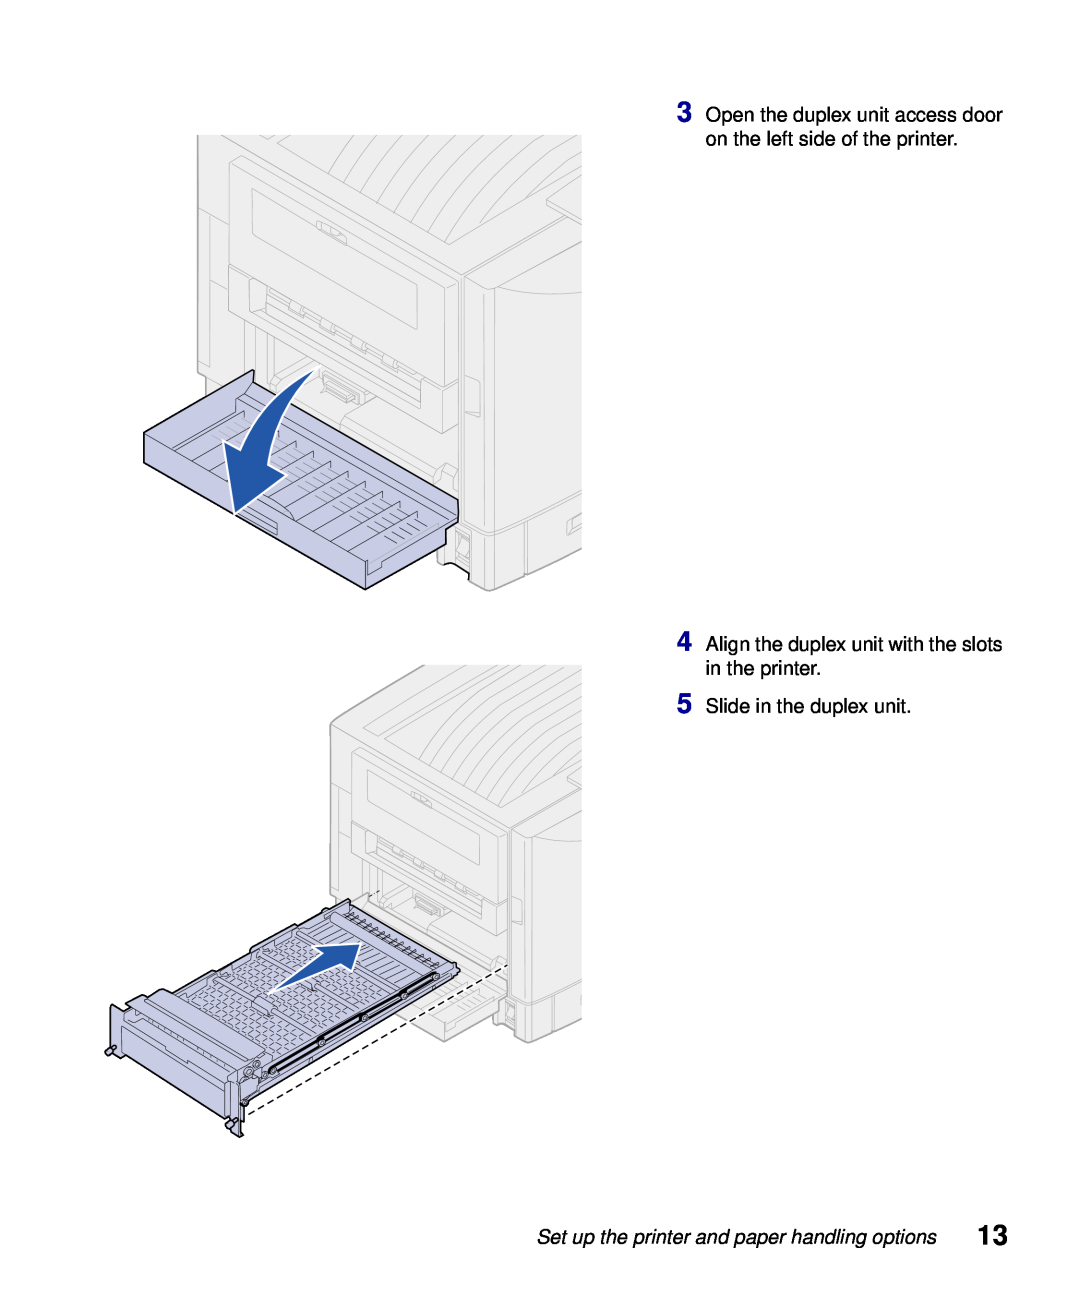 Lexmark S510-2222-00 setup guide Slide in the duplex unit, Set up the printer and paper handling options 